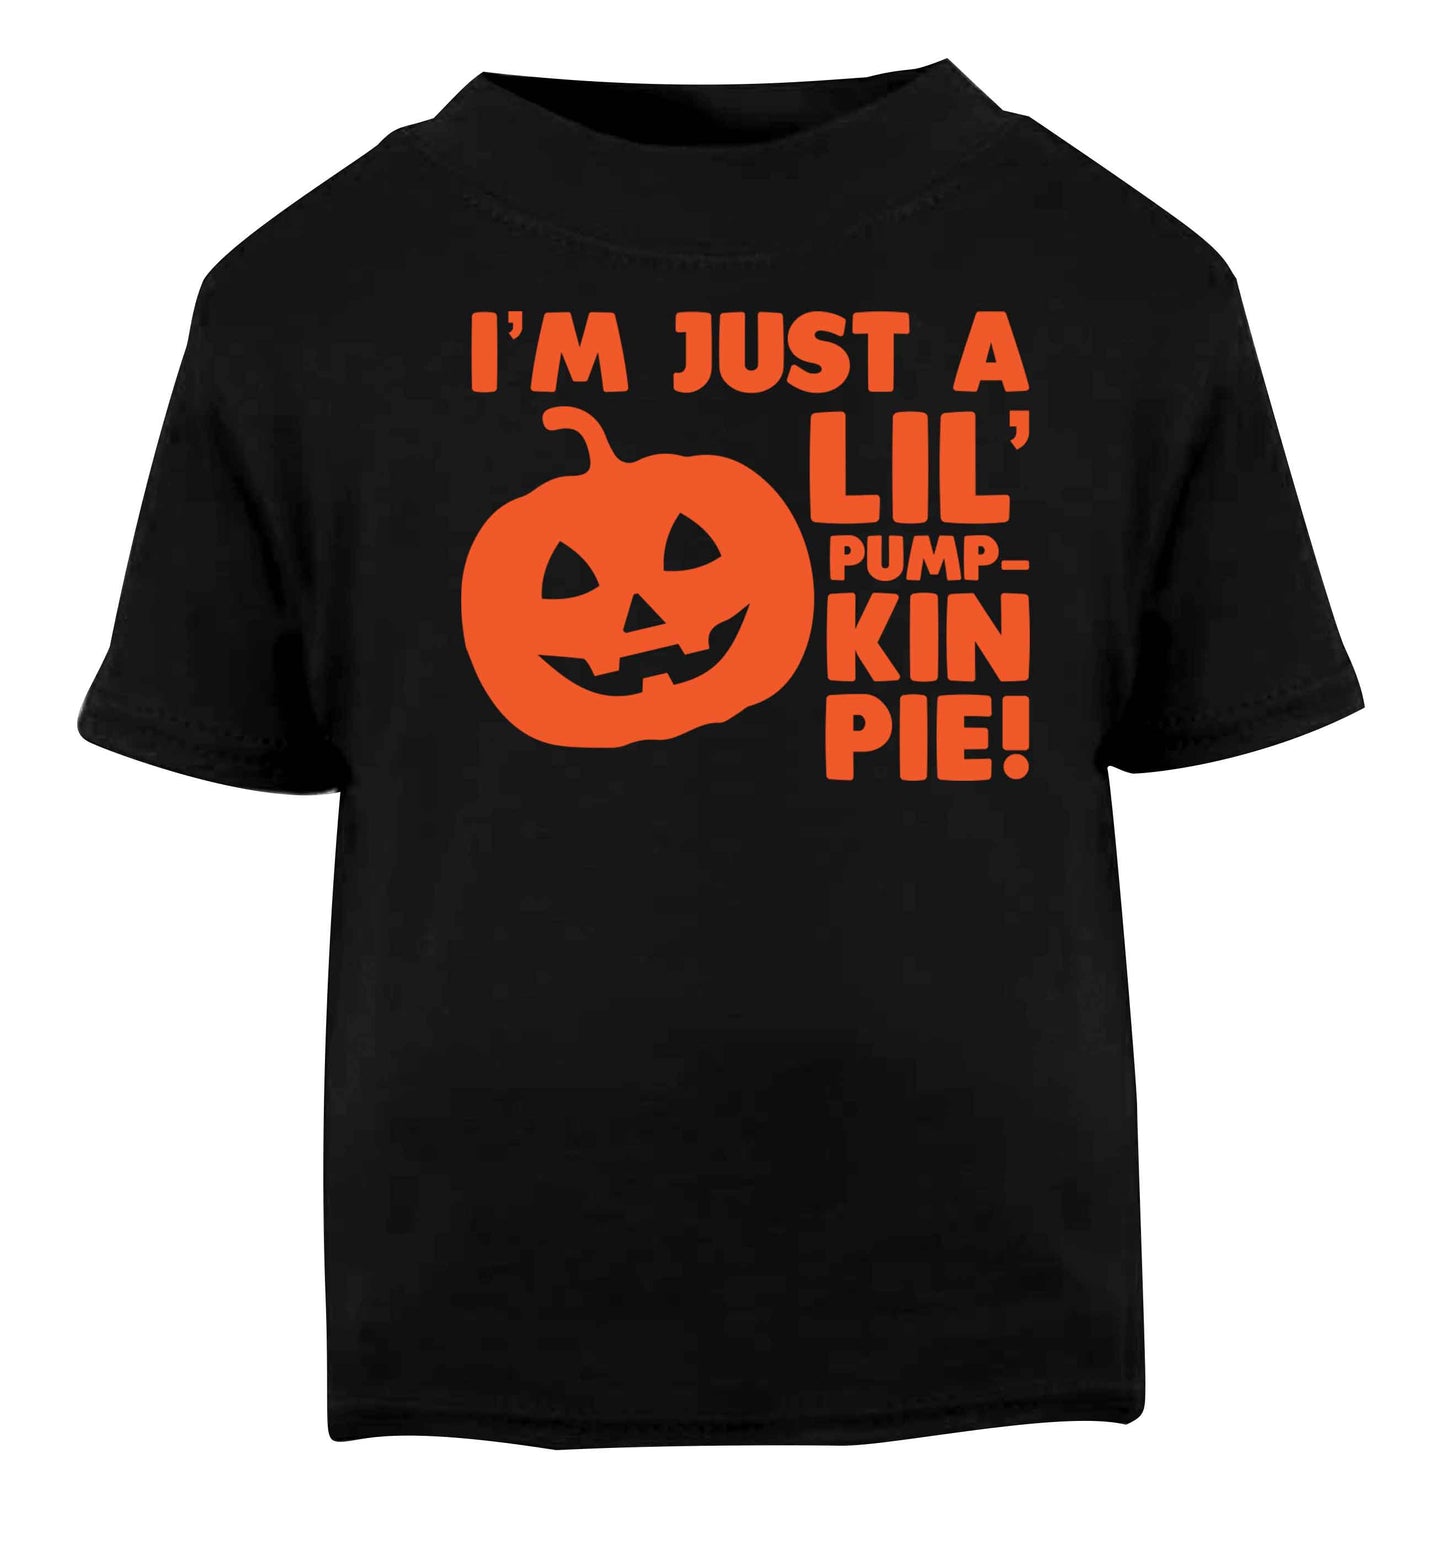 I'm just a lil' pumpkin pie Black baby toddler Tshirt 2 years